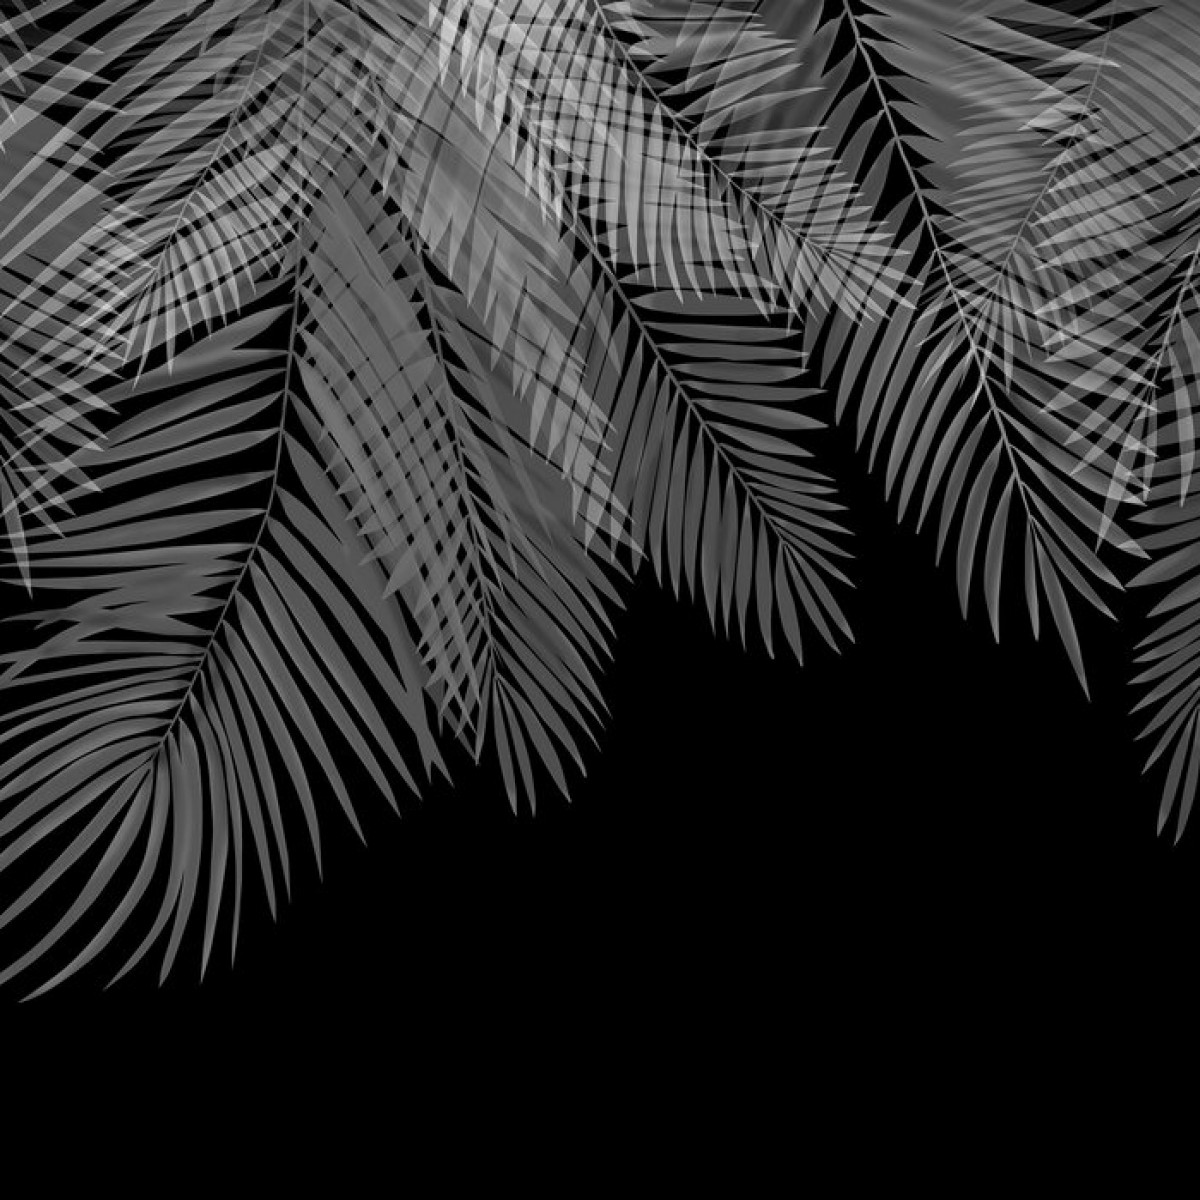 Fototapet Hanging Palm Leaves, Black-White, Personalizat, Photowall, Fototapet living 